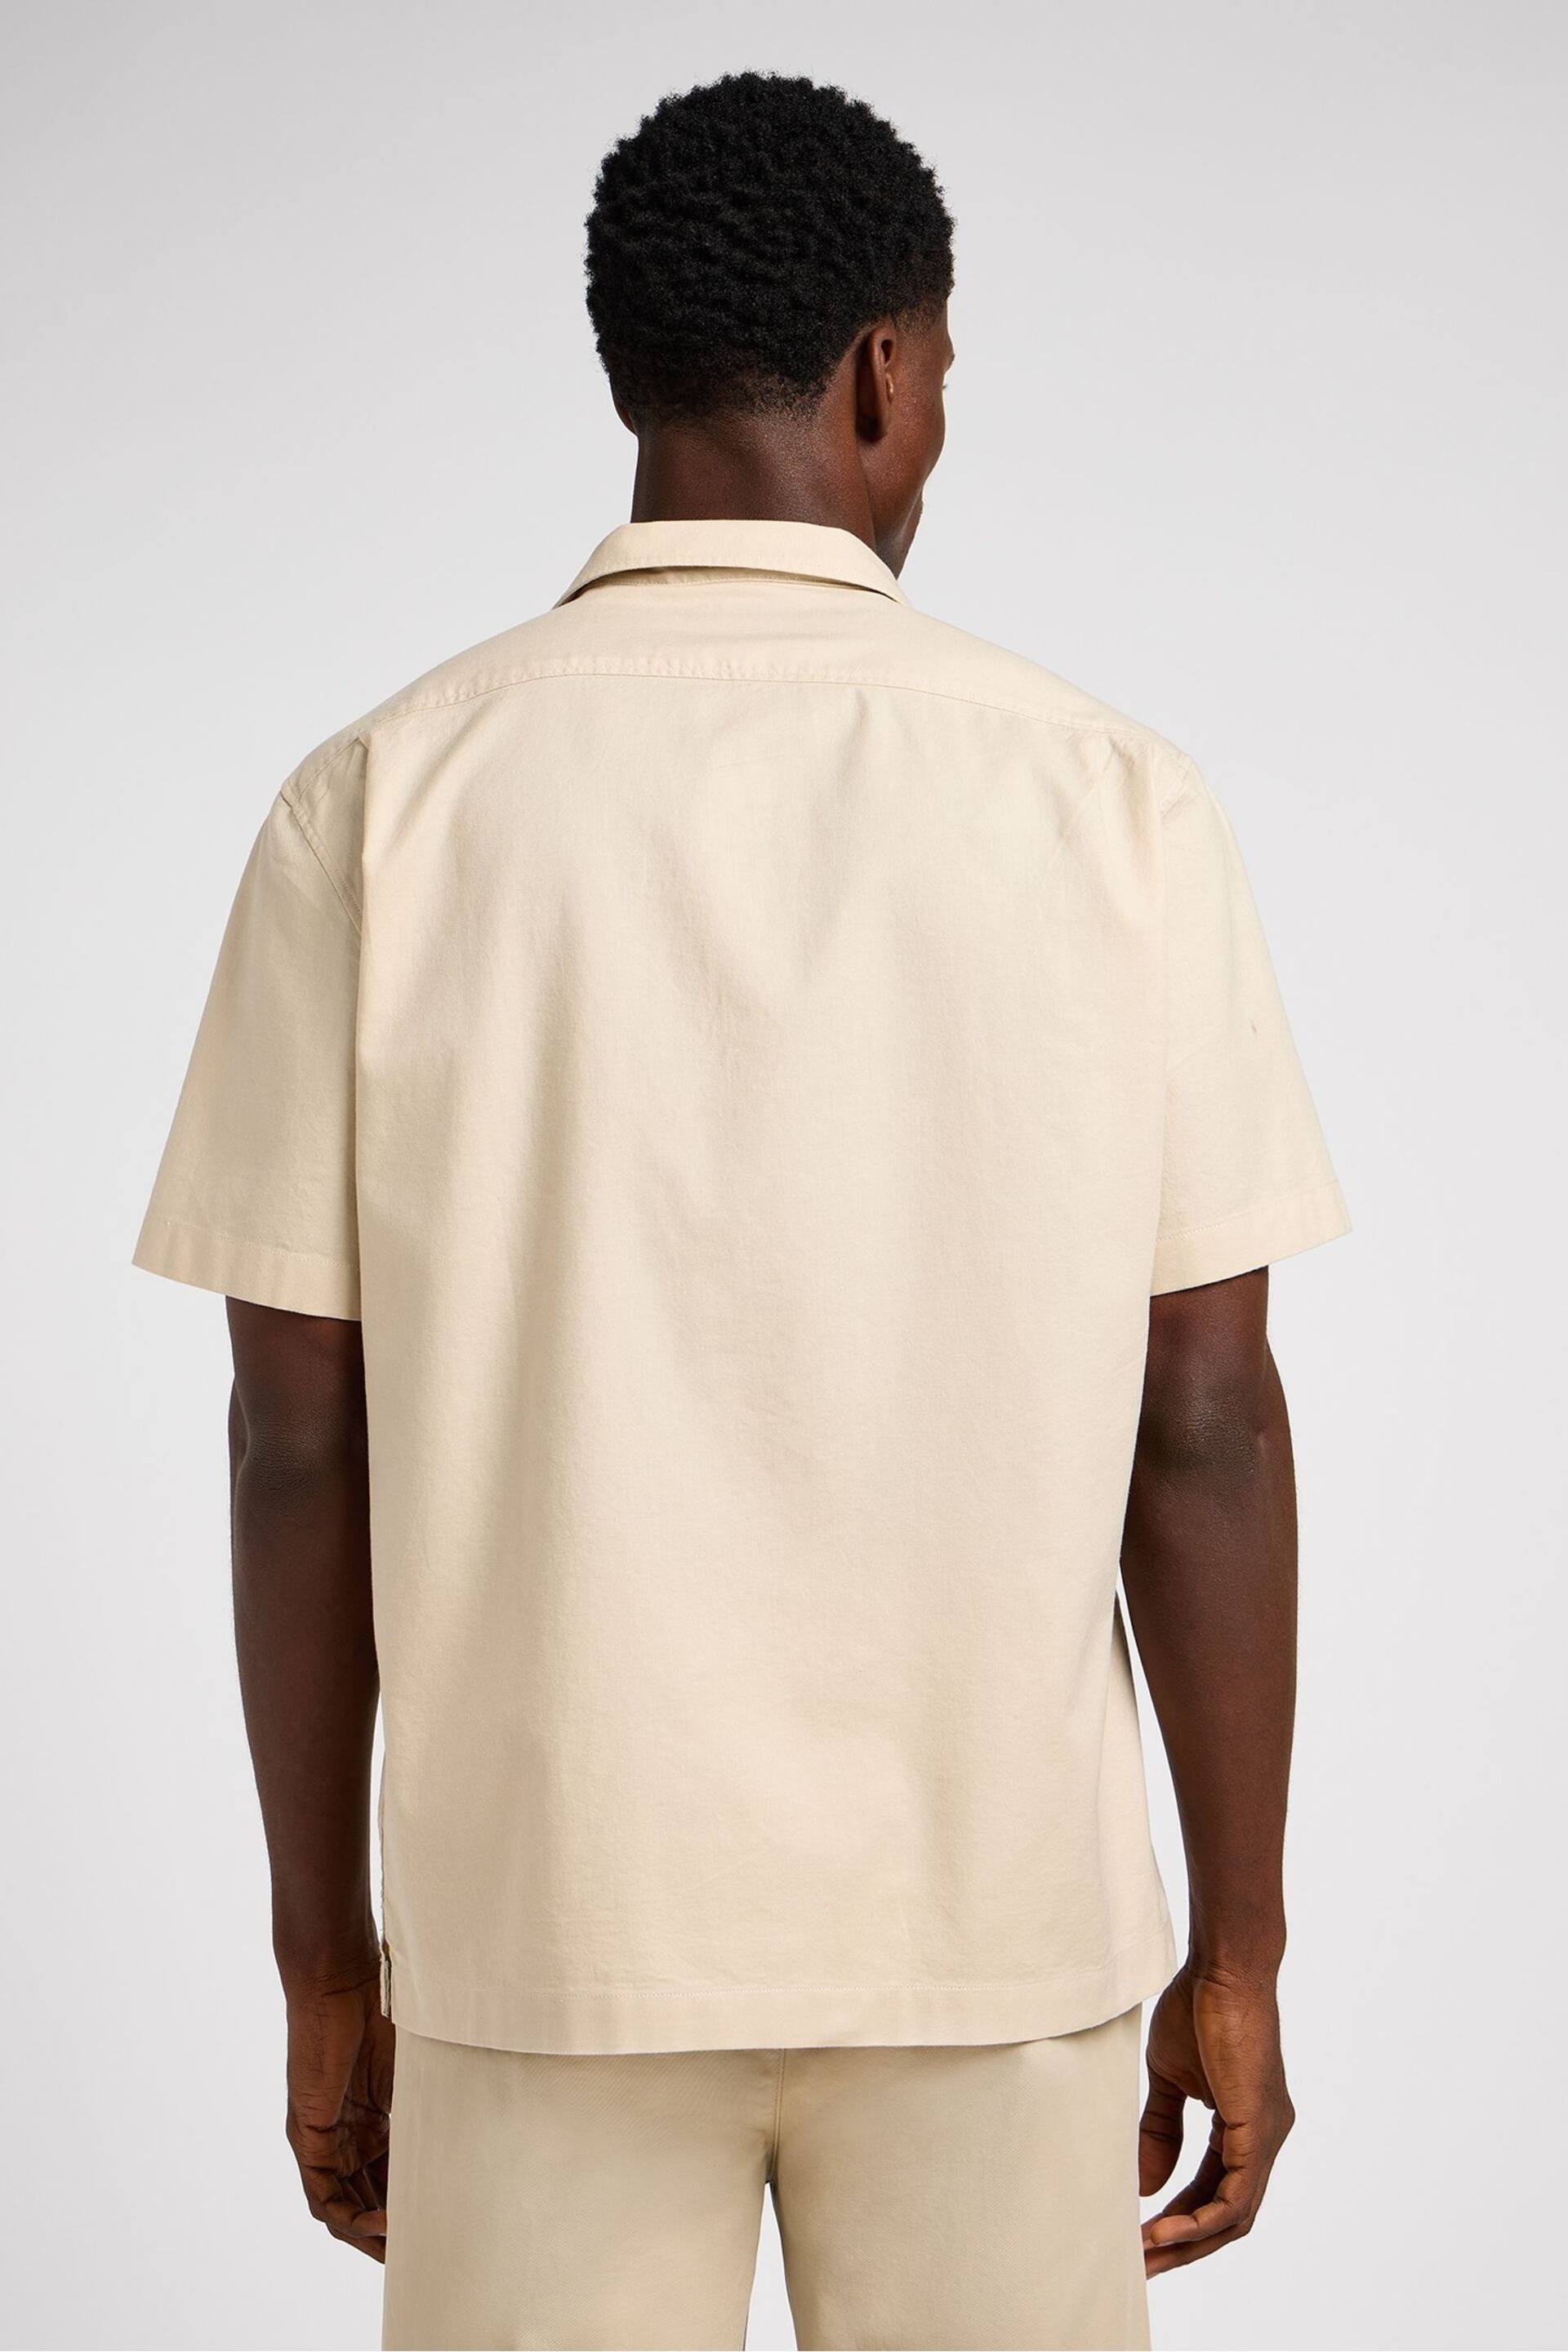 Lee Stone Chetopa Twill Shirt - Image 2 of 5